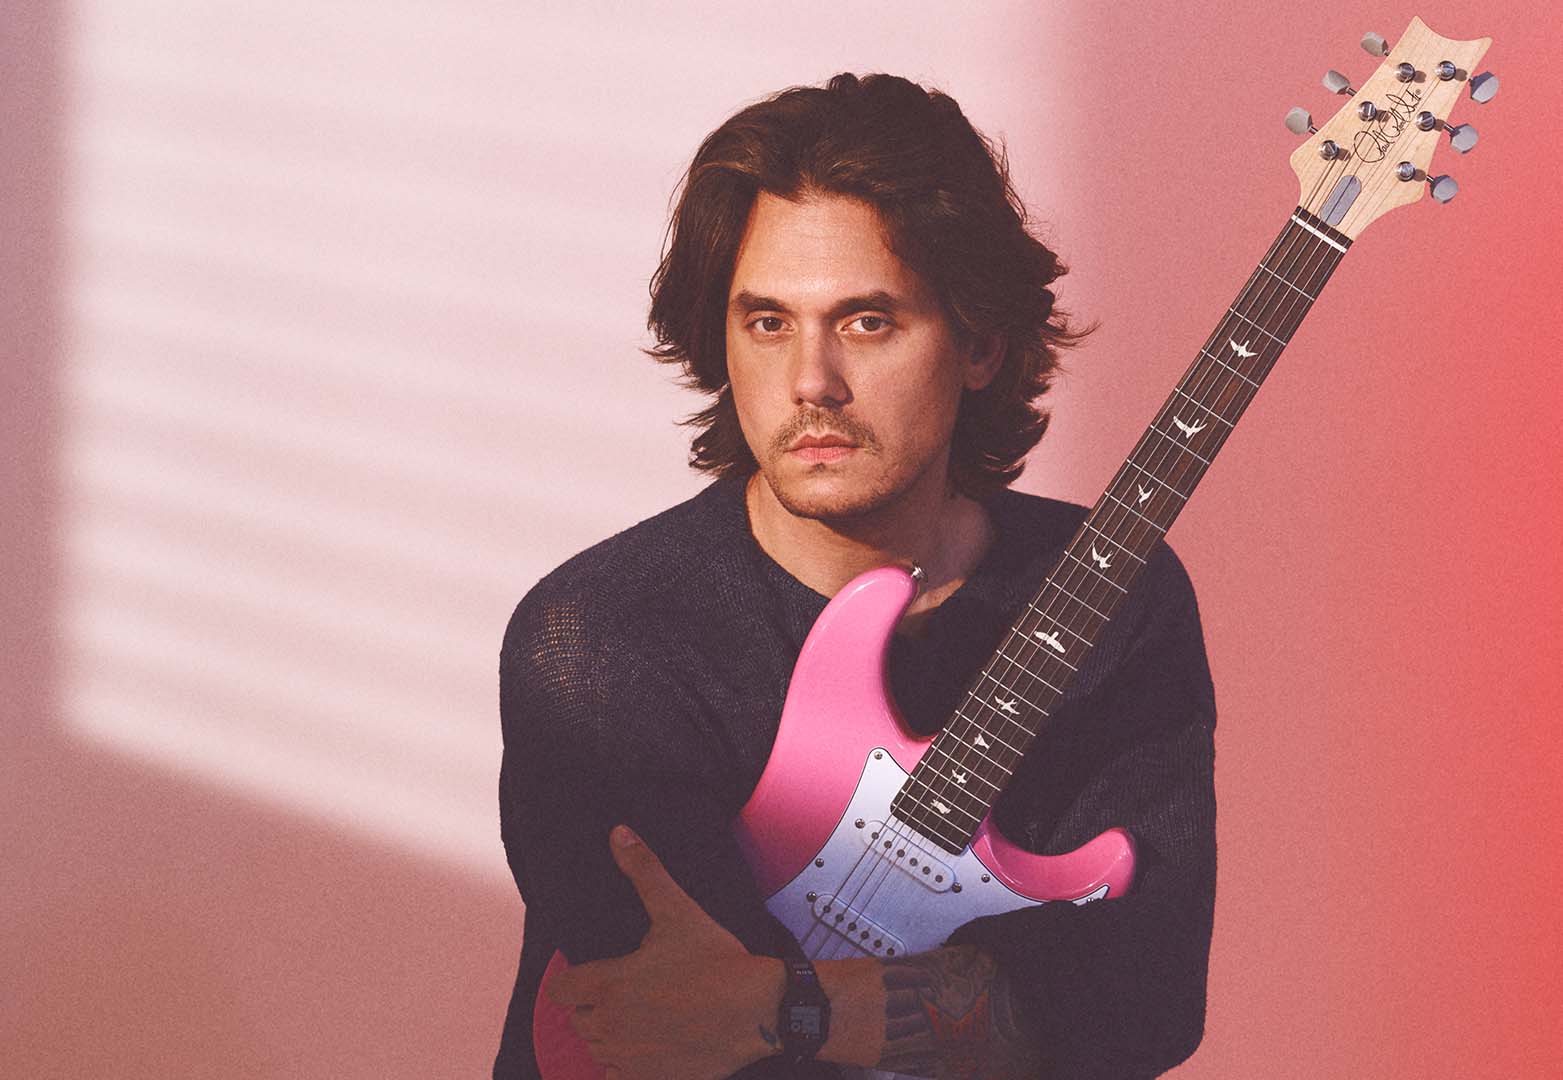 John Mayer releases retro-inspired new album, Sob Rock